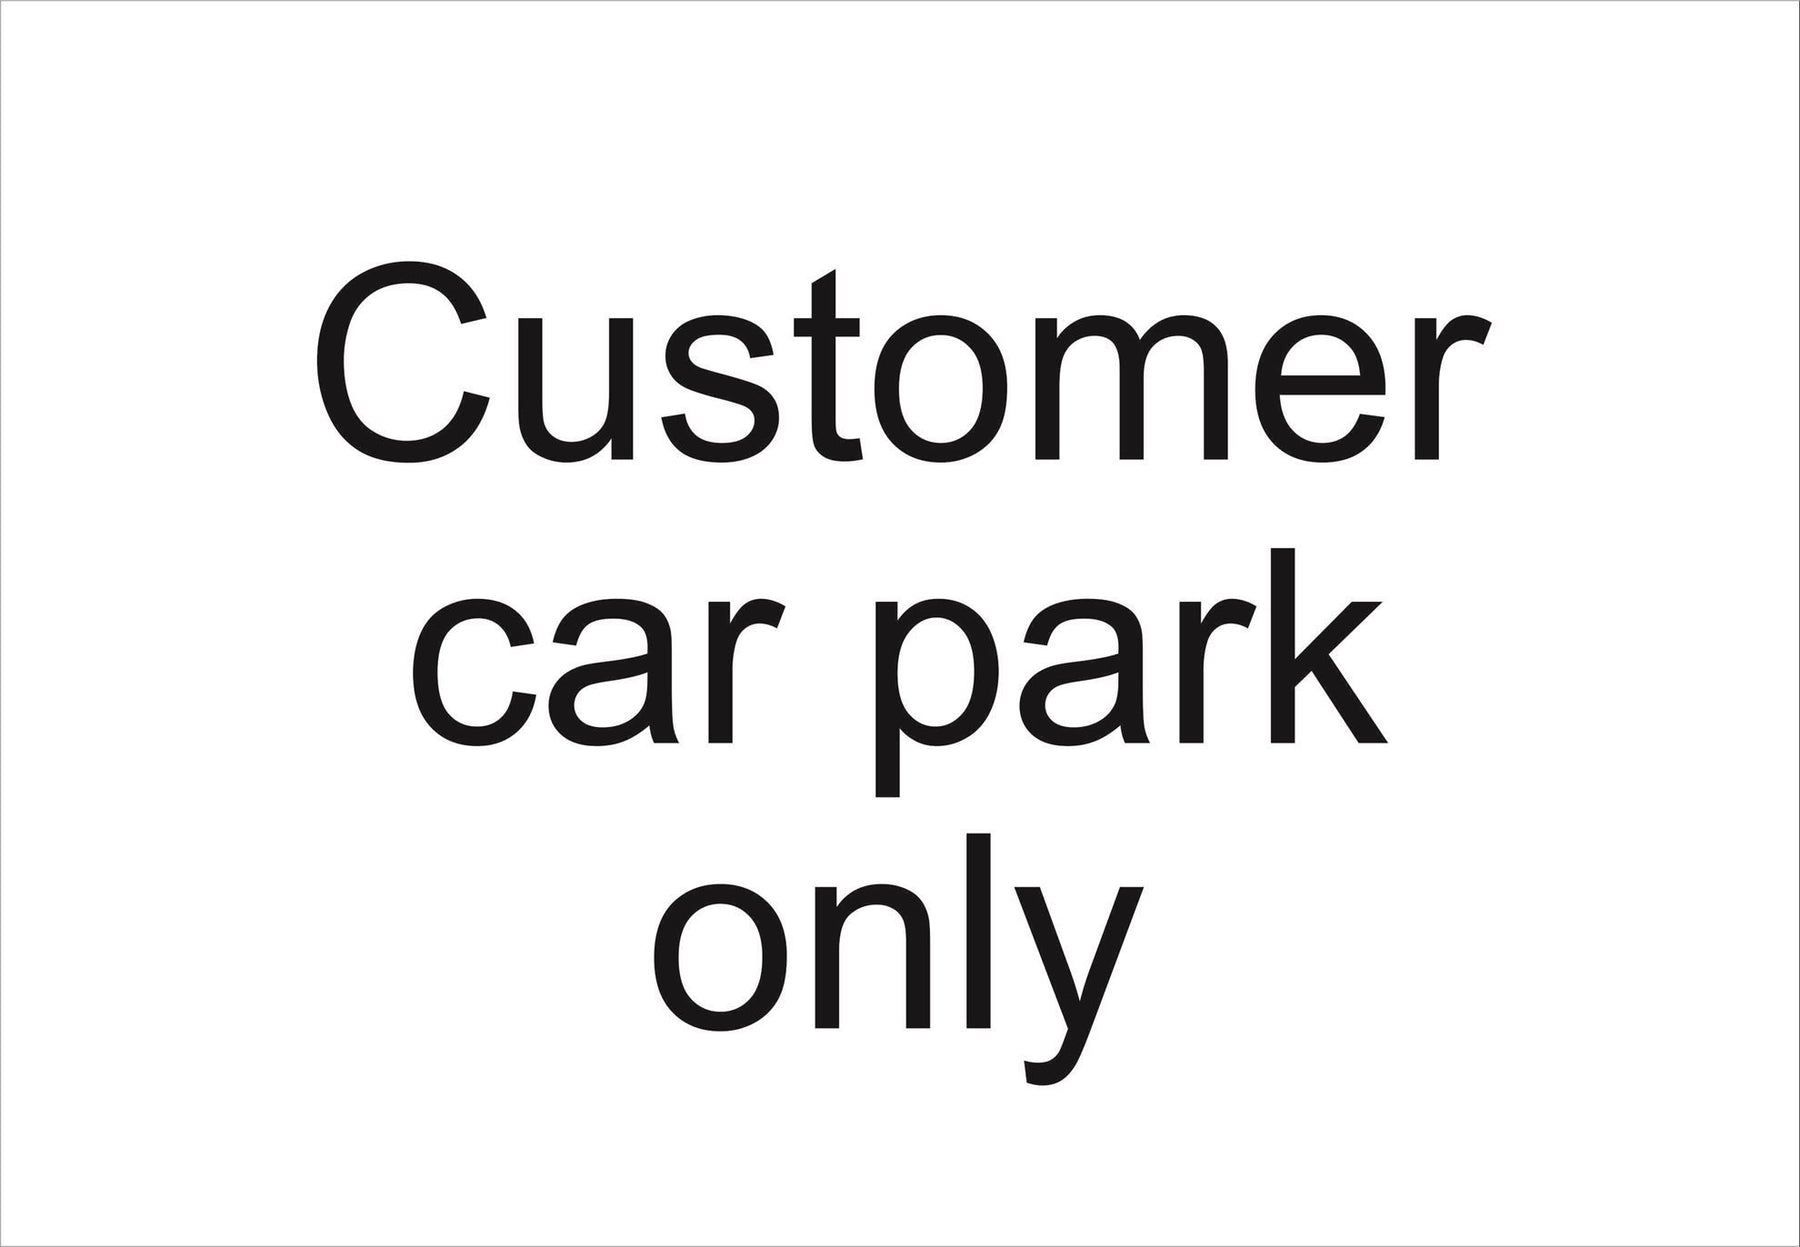 Customer car park only